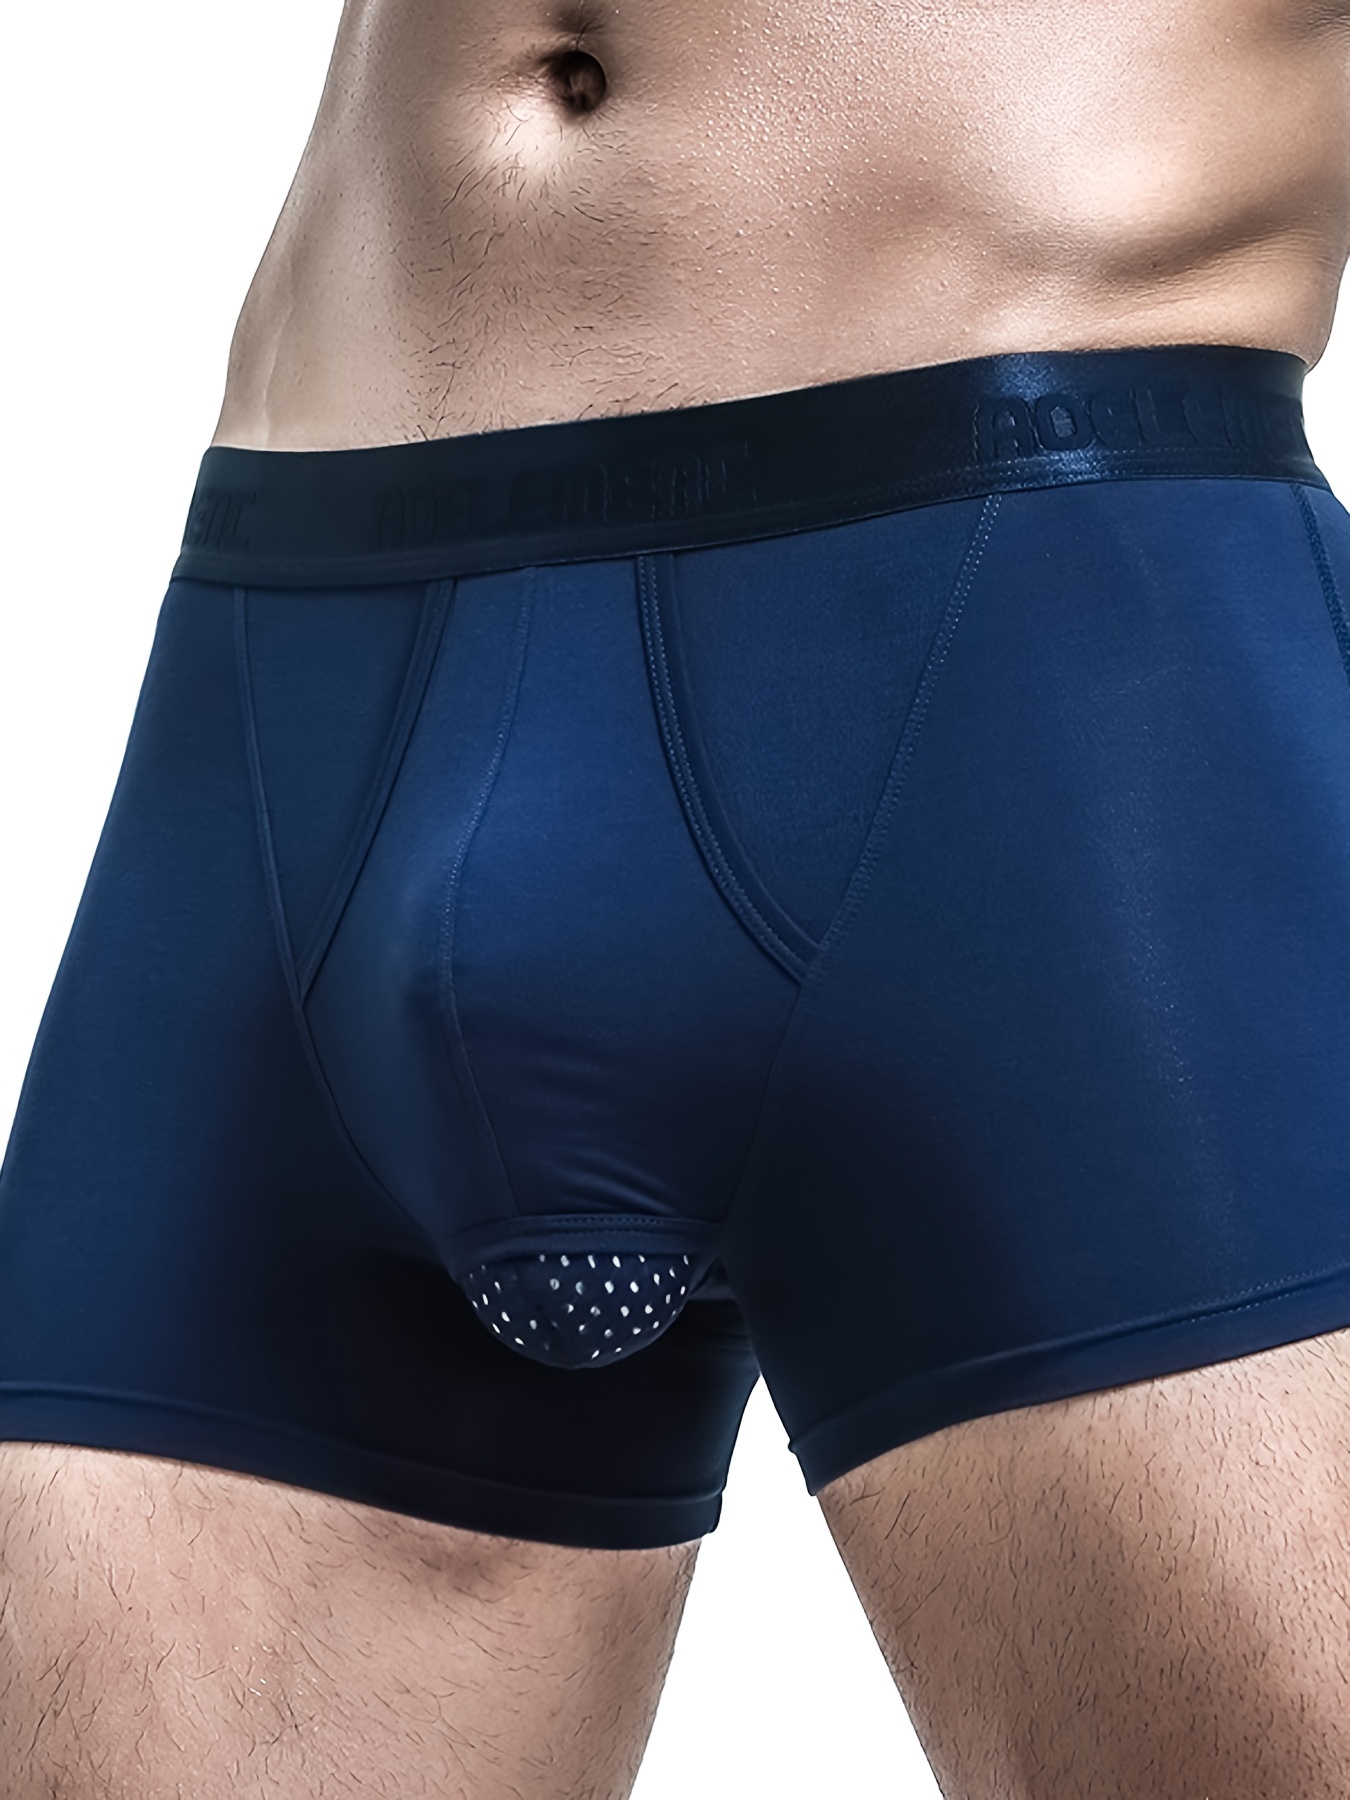 Faringoto Mens Elephant Underwear Boxer Bulge Pouch Male Panties Ice Silk  Shorts Underpants S-XL Black : : Clothing, Shoes & Accessories